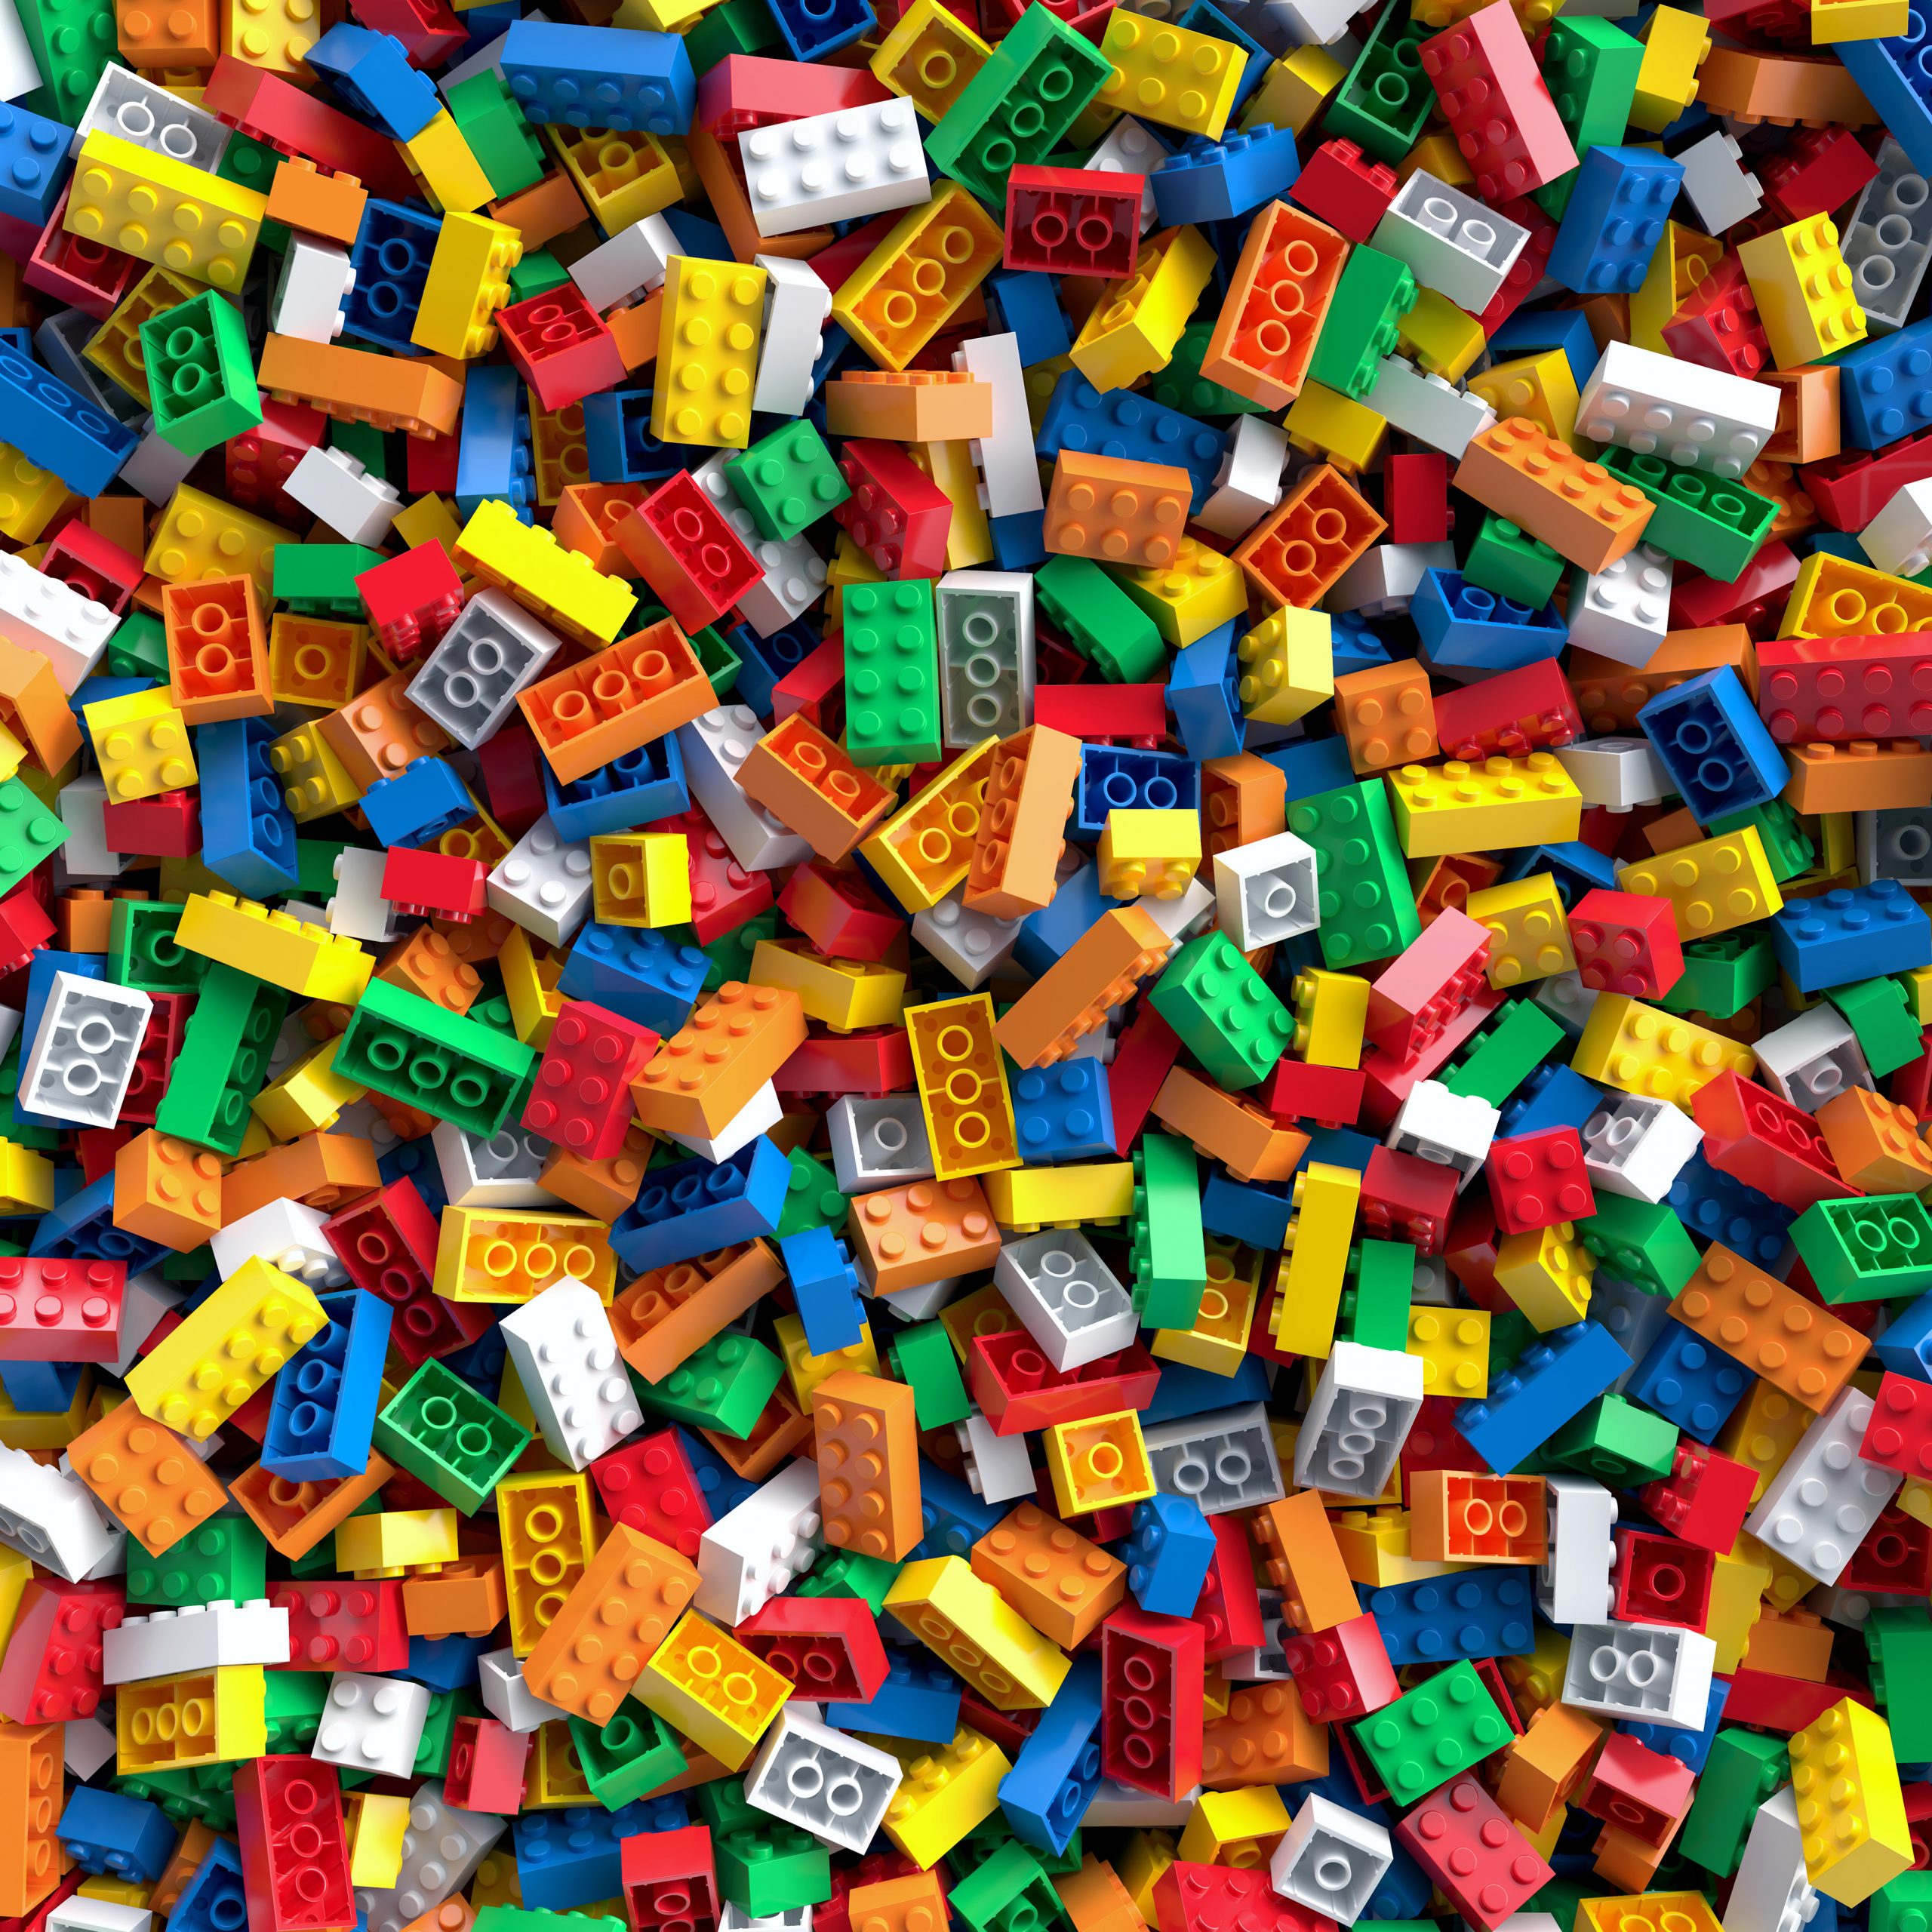 Picture of colourful lego bricks, en masse